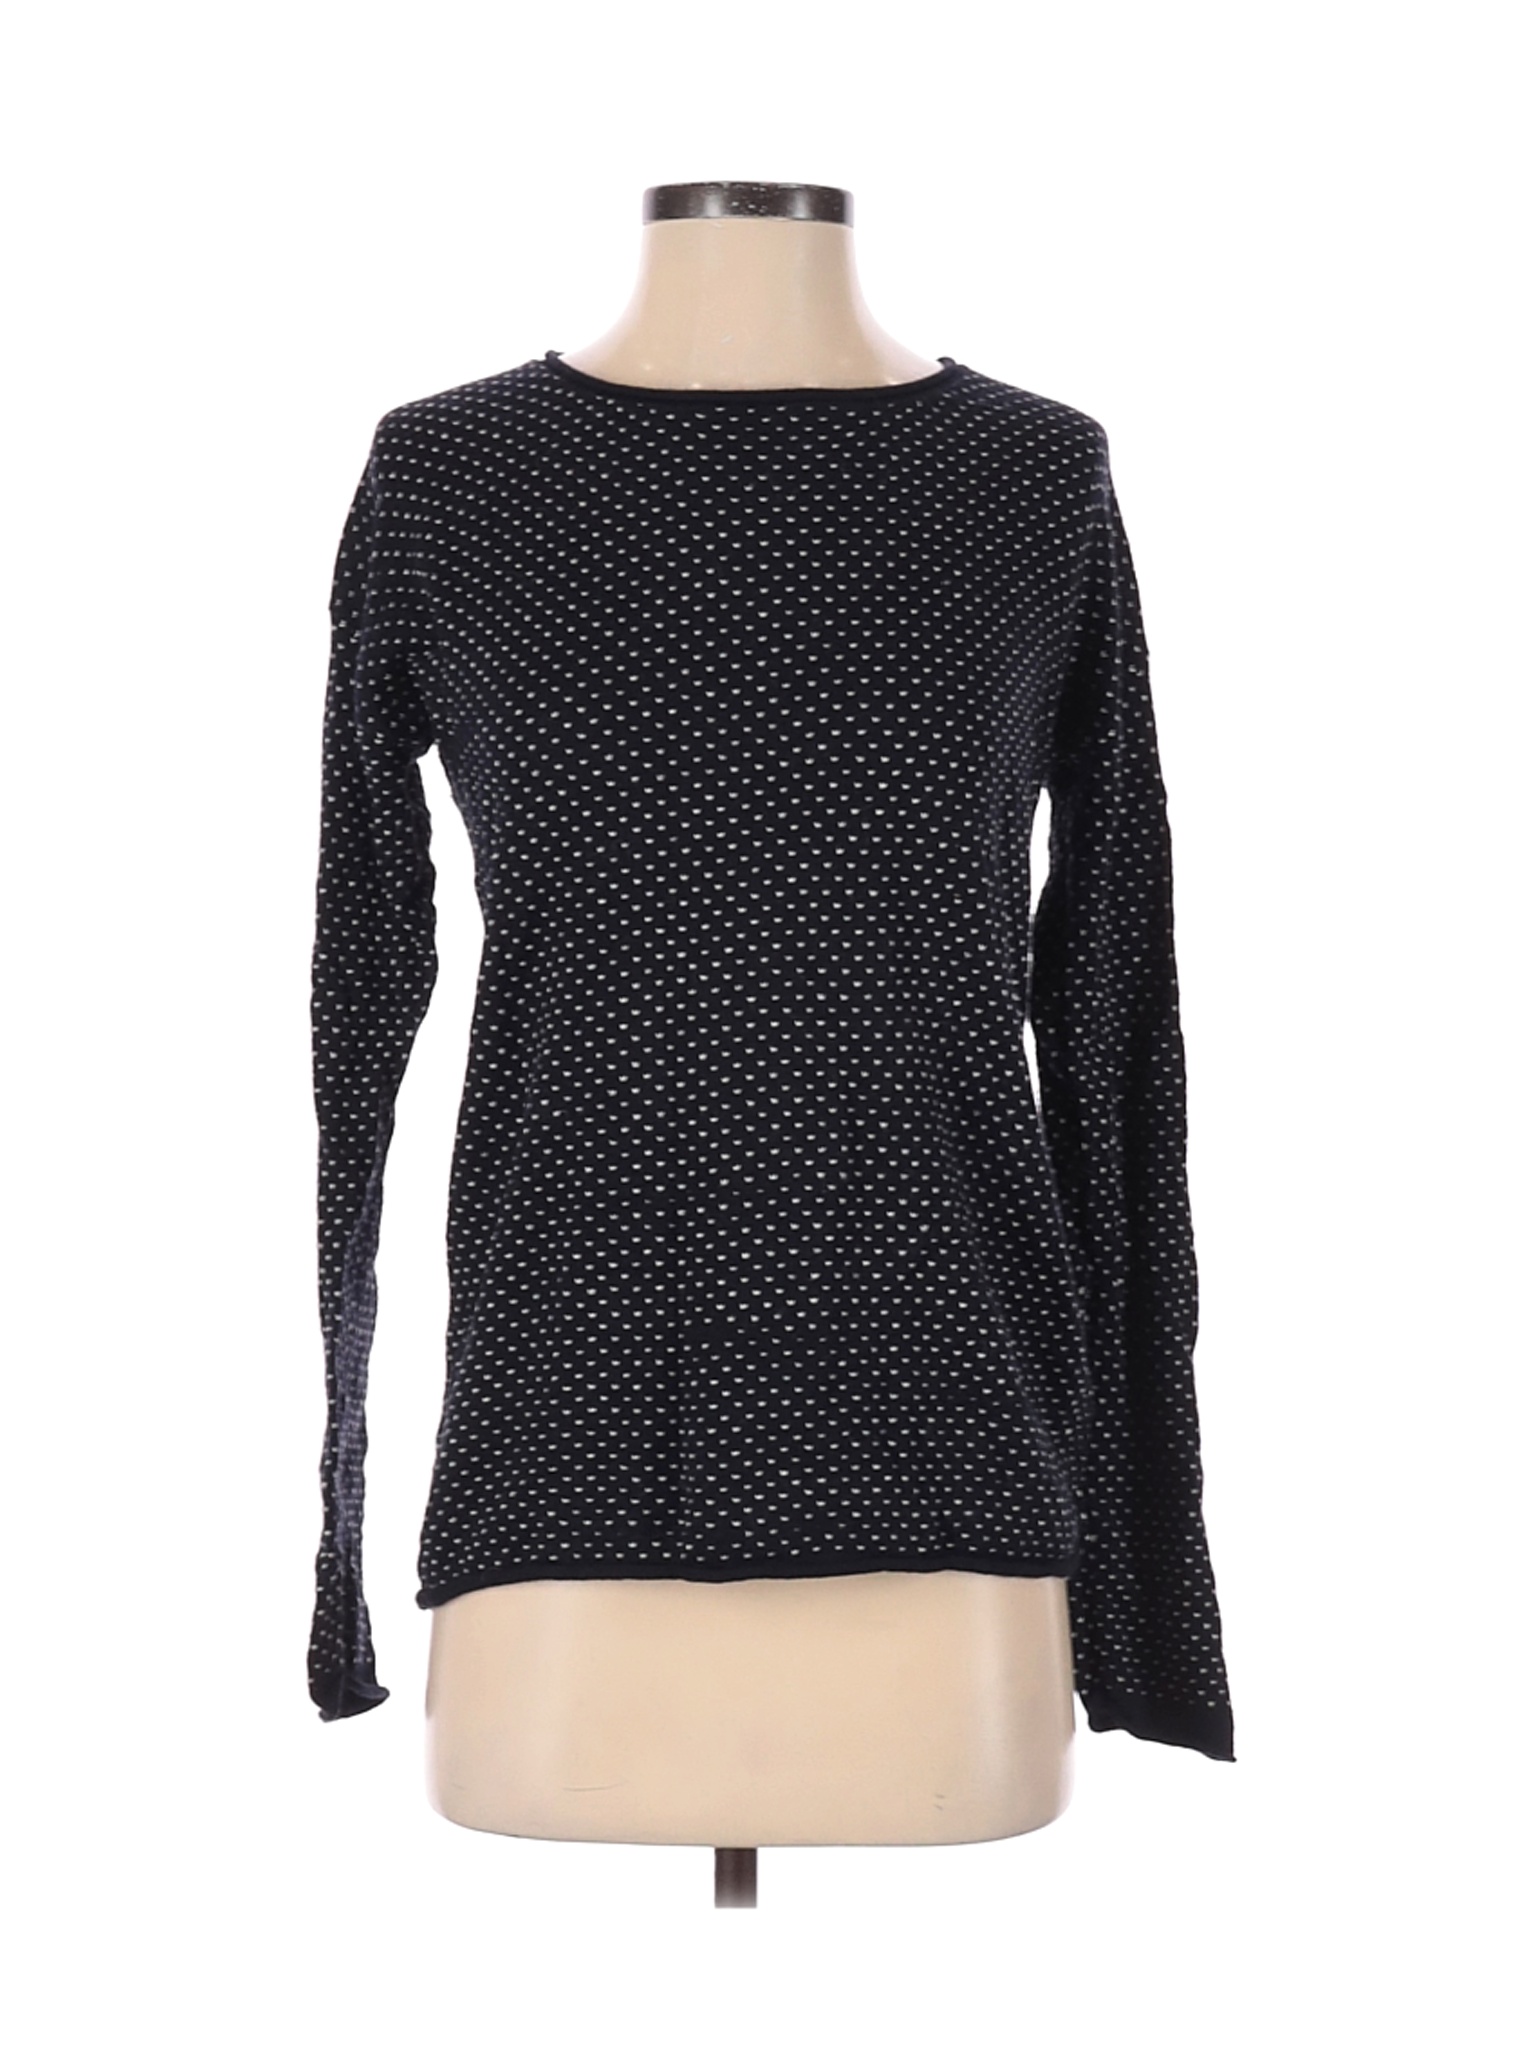 H&M L.O.G.G. Women Black Pullover Sweater S | eBay